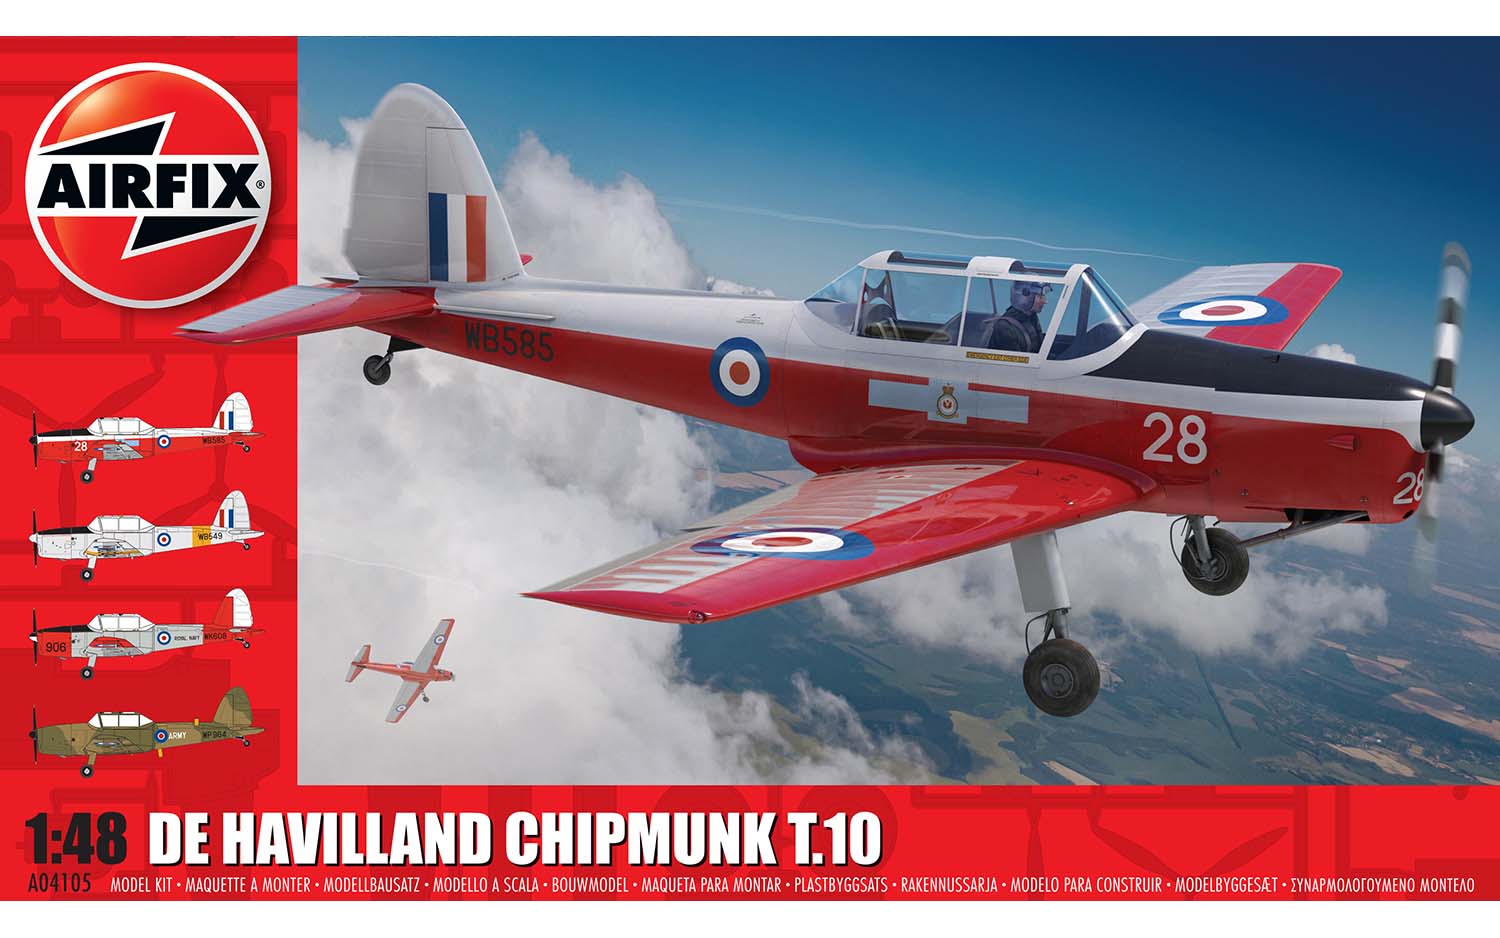 Classic Kit A04105 - de Havilland Chipmunk T.10 (1:48)